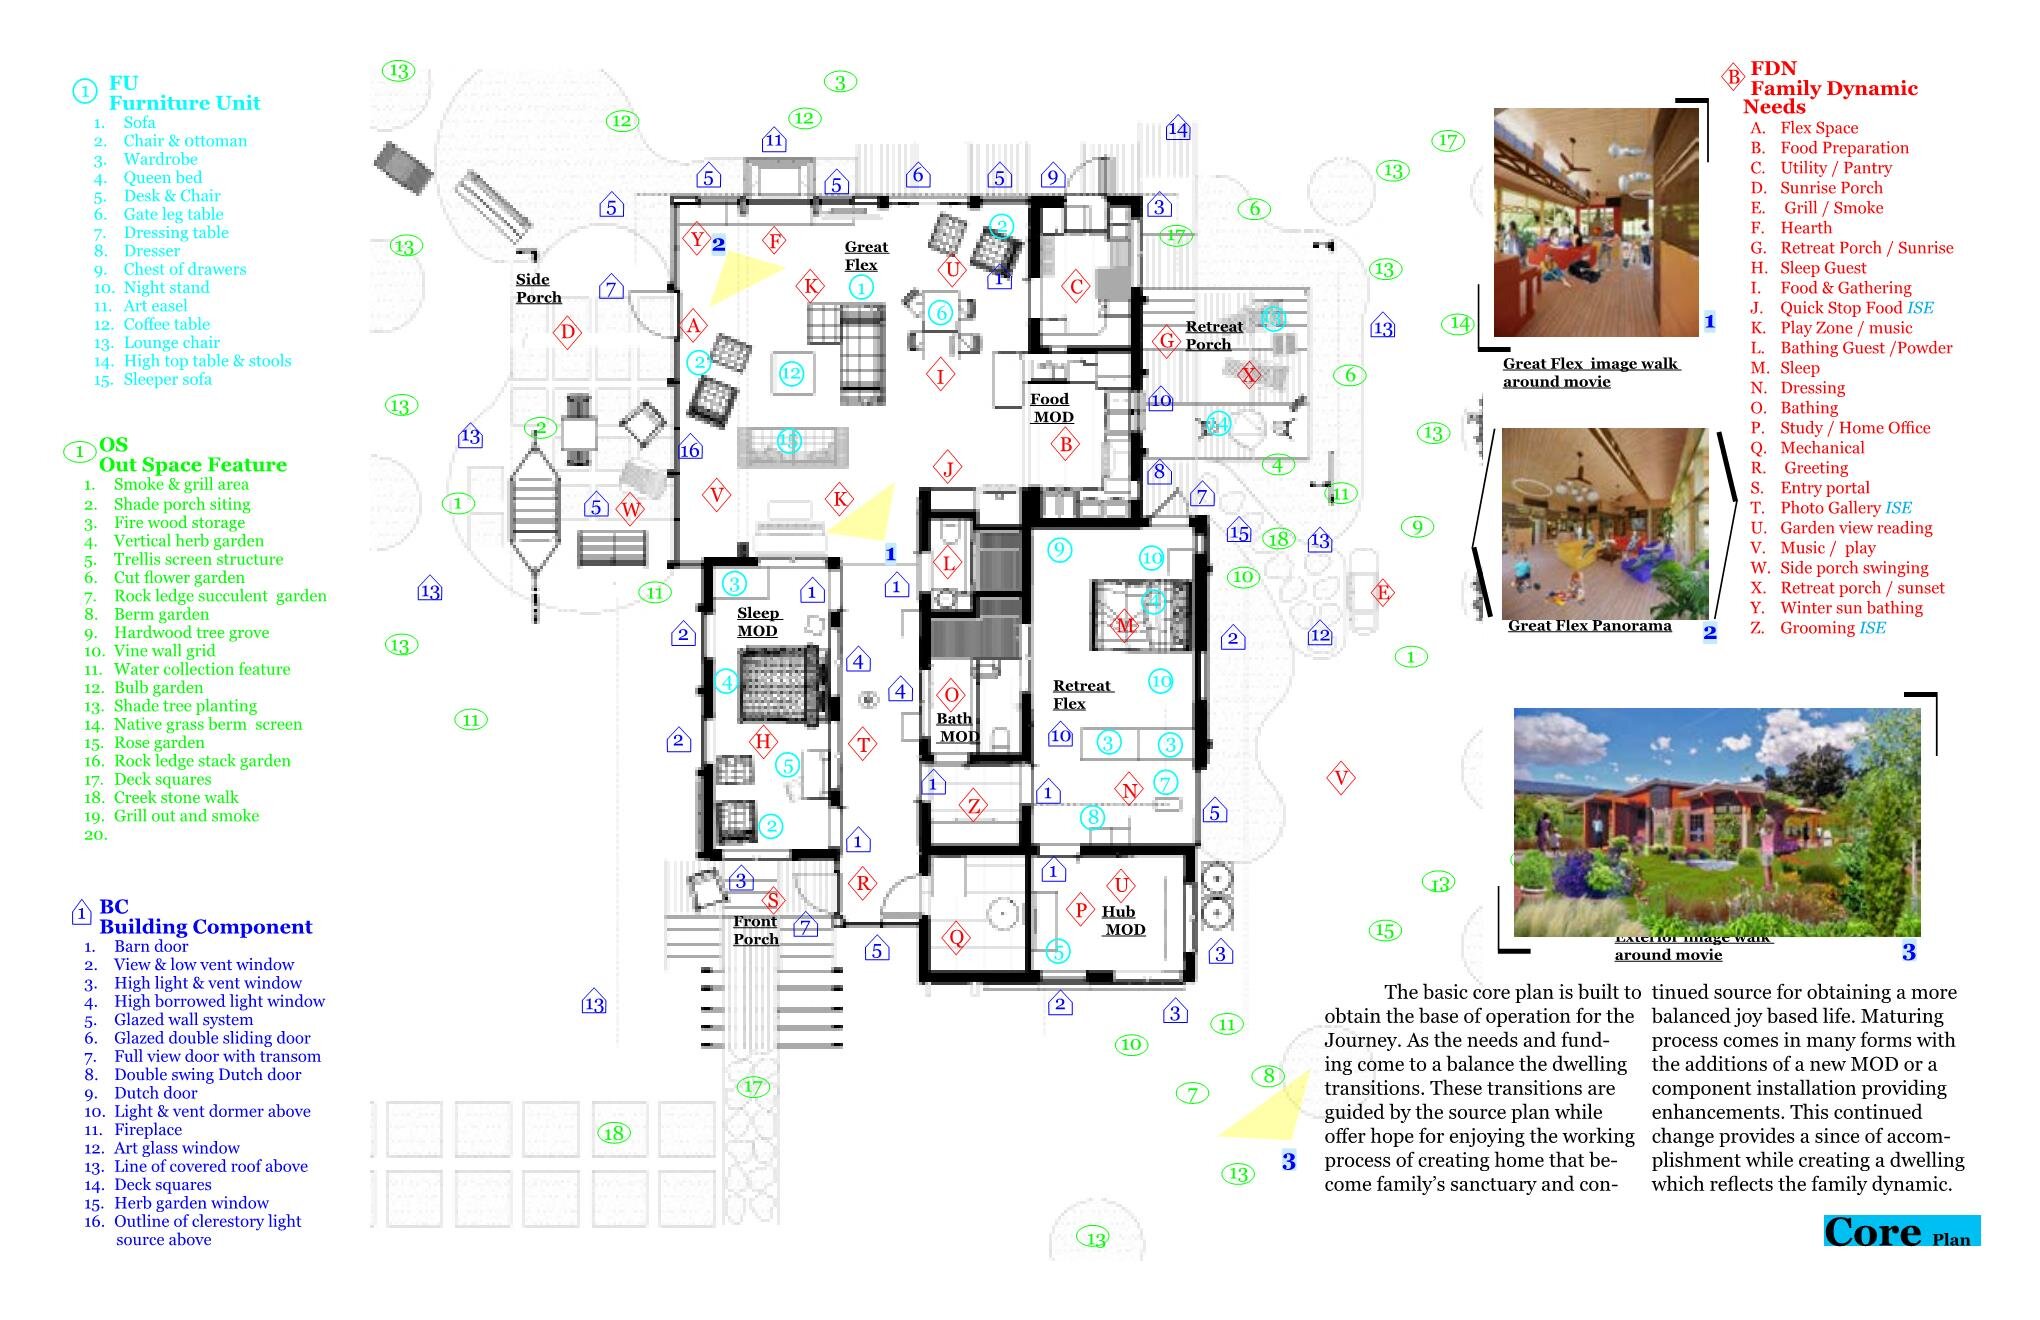 Genesis home detailed plan 